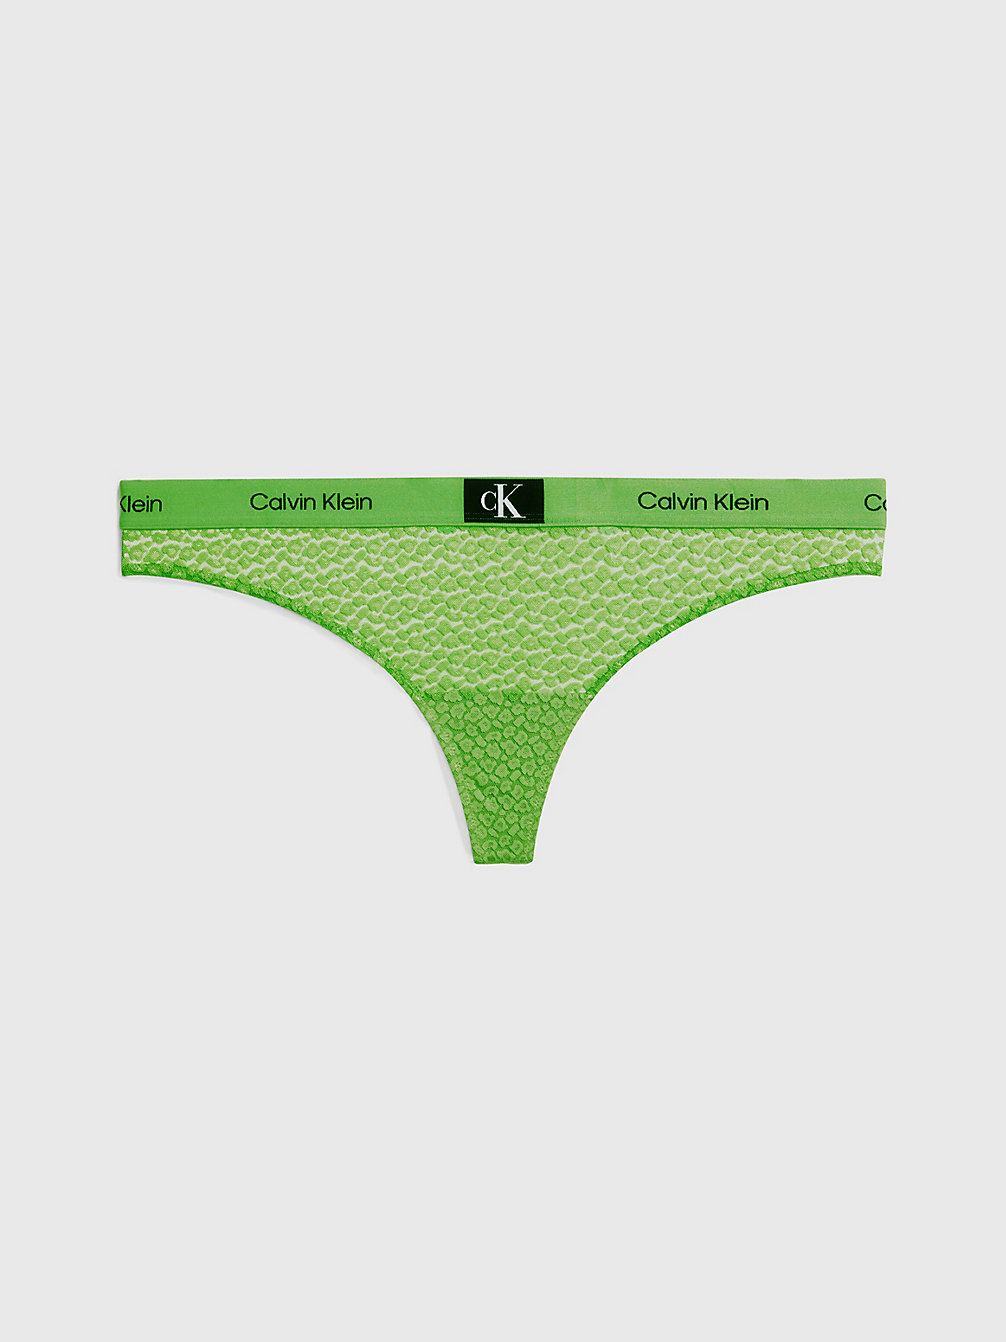 FABULOUS GREEN Plus Size Thong - Ck96 undefined women Calvin Klein